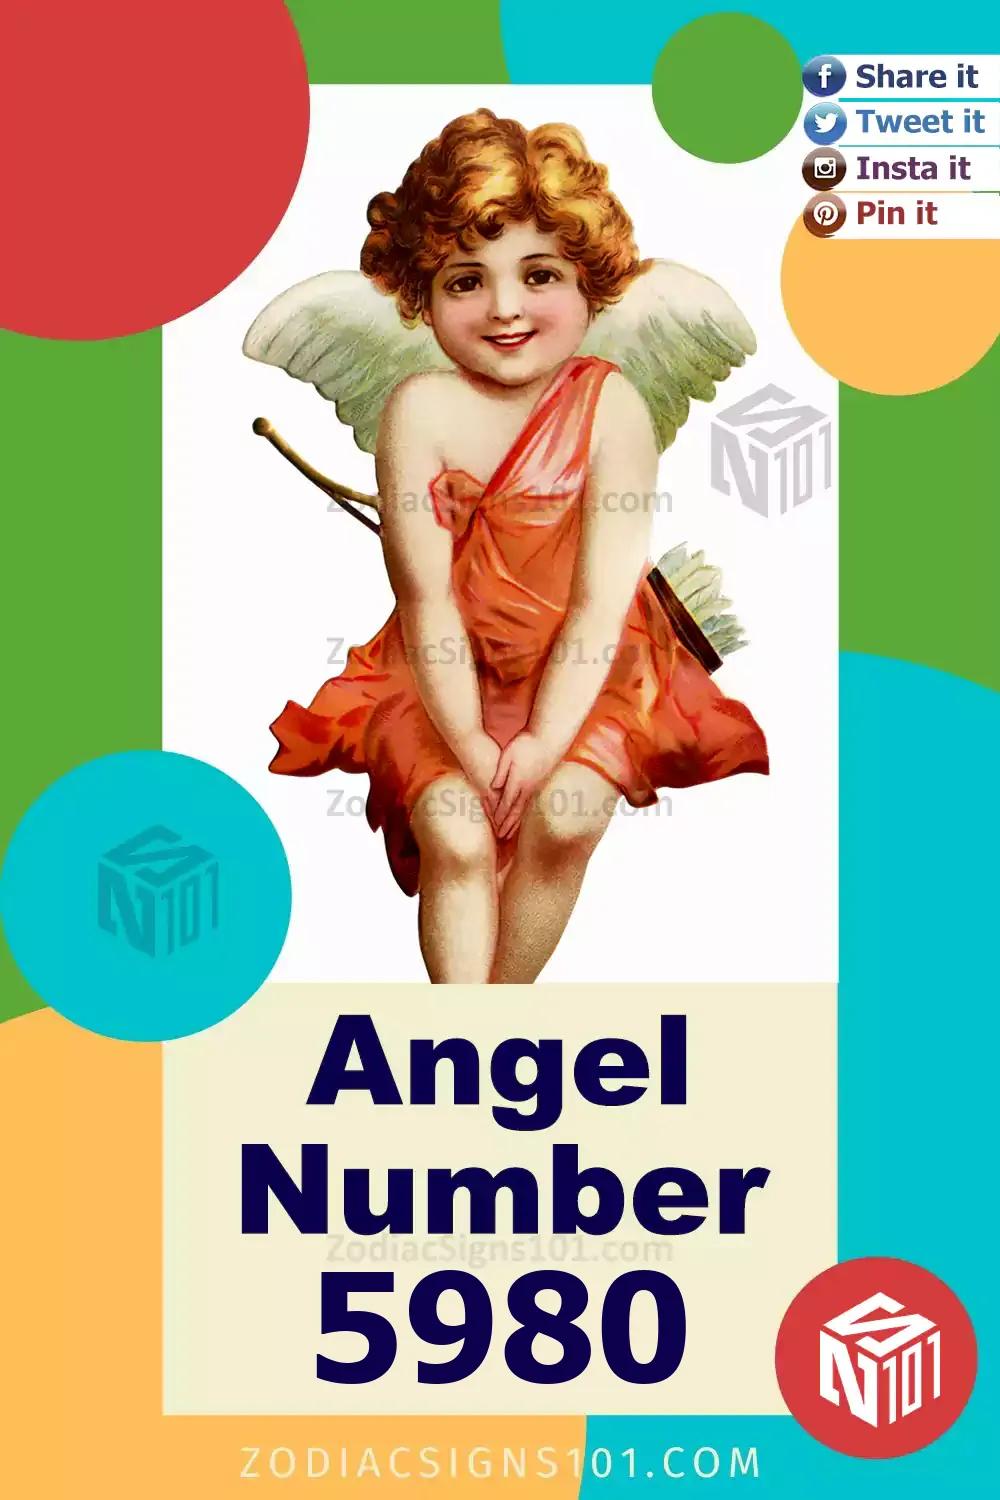 5980-Angel-Number-Meaning.jpg